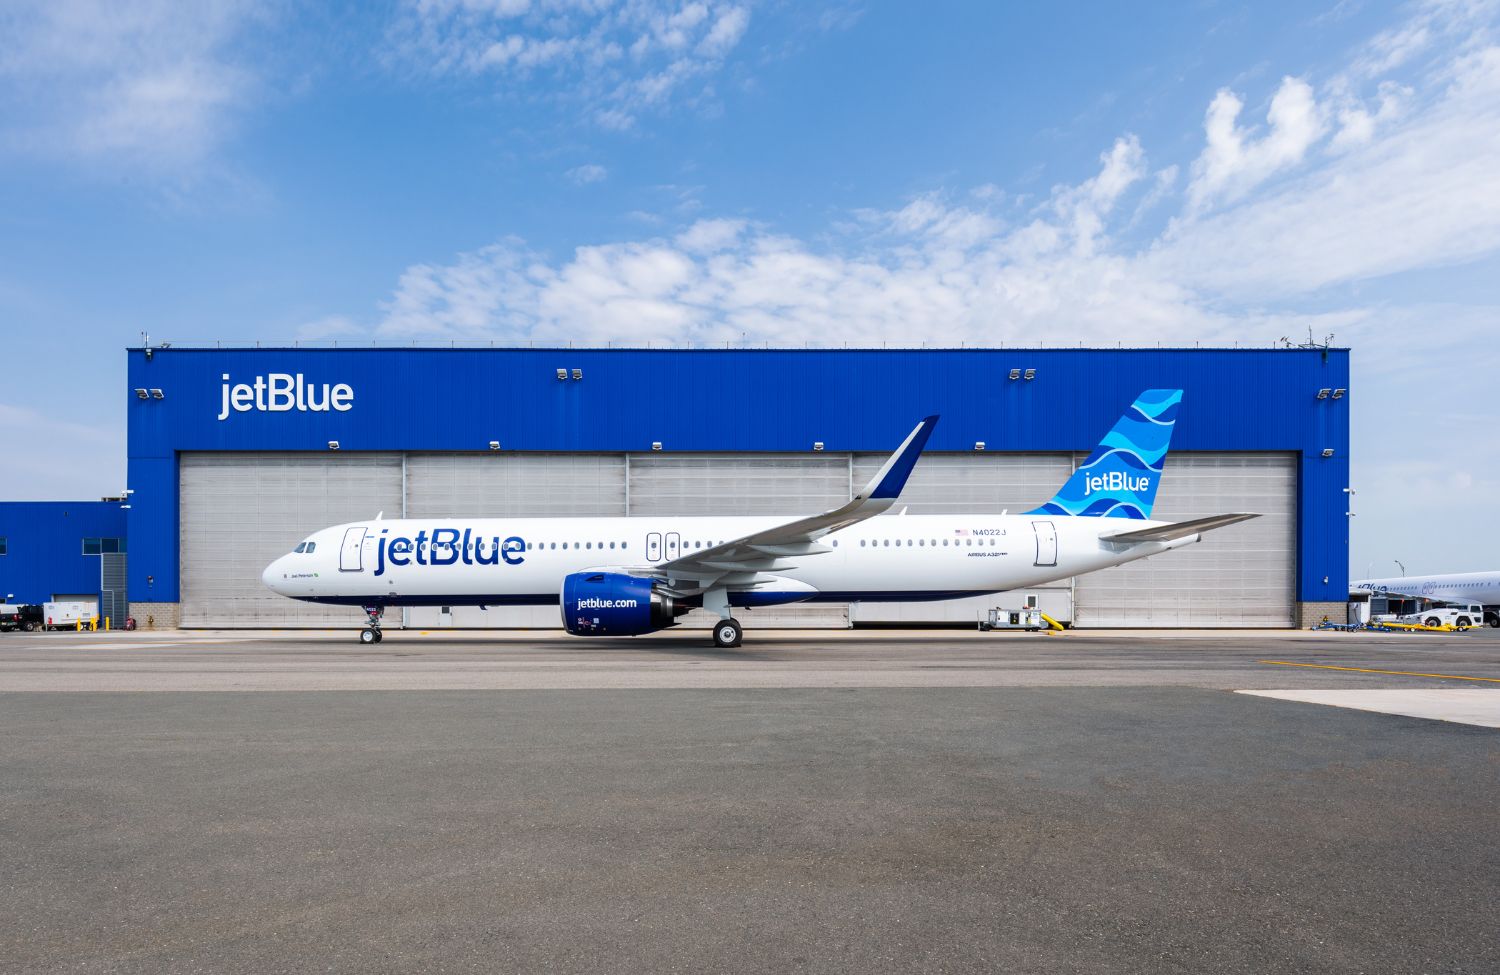 JetBlue A321neo LR at Hangar